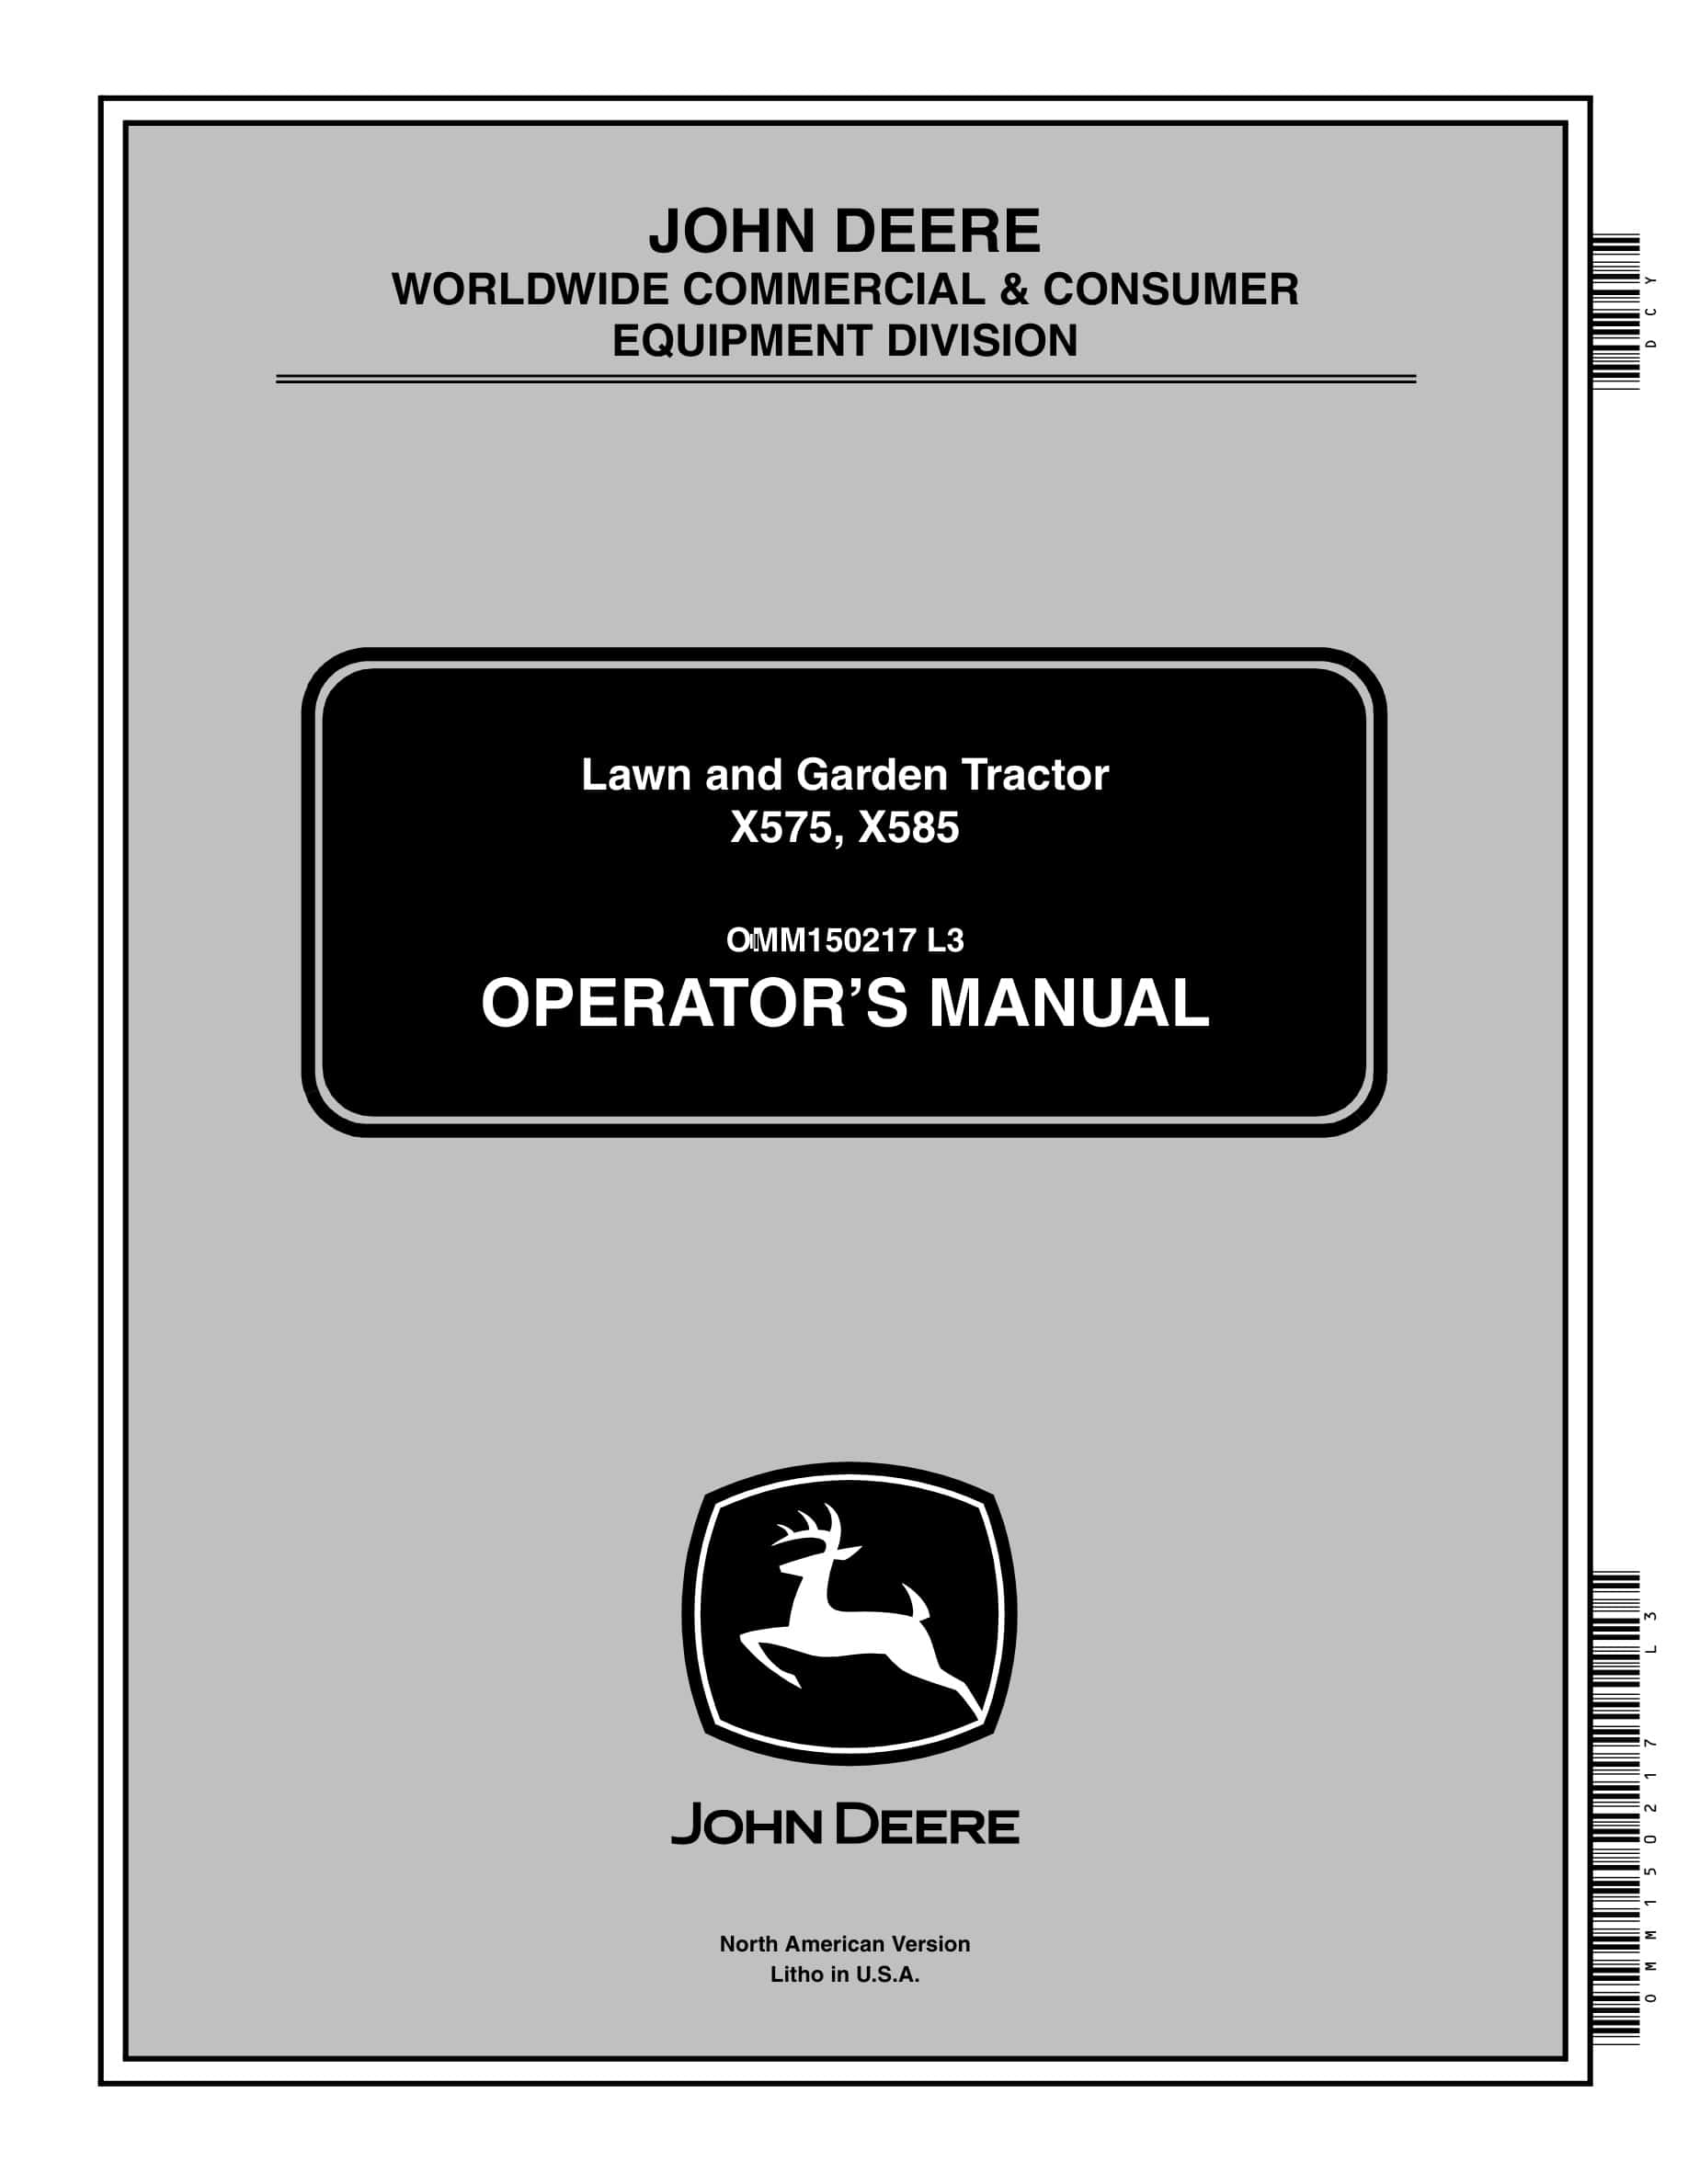 John Deere X575, X585 Tractor Operator Manual OMM150217-1